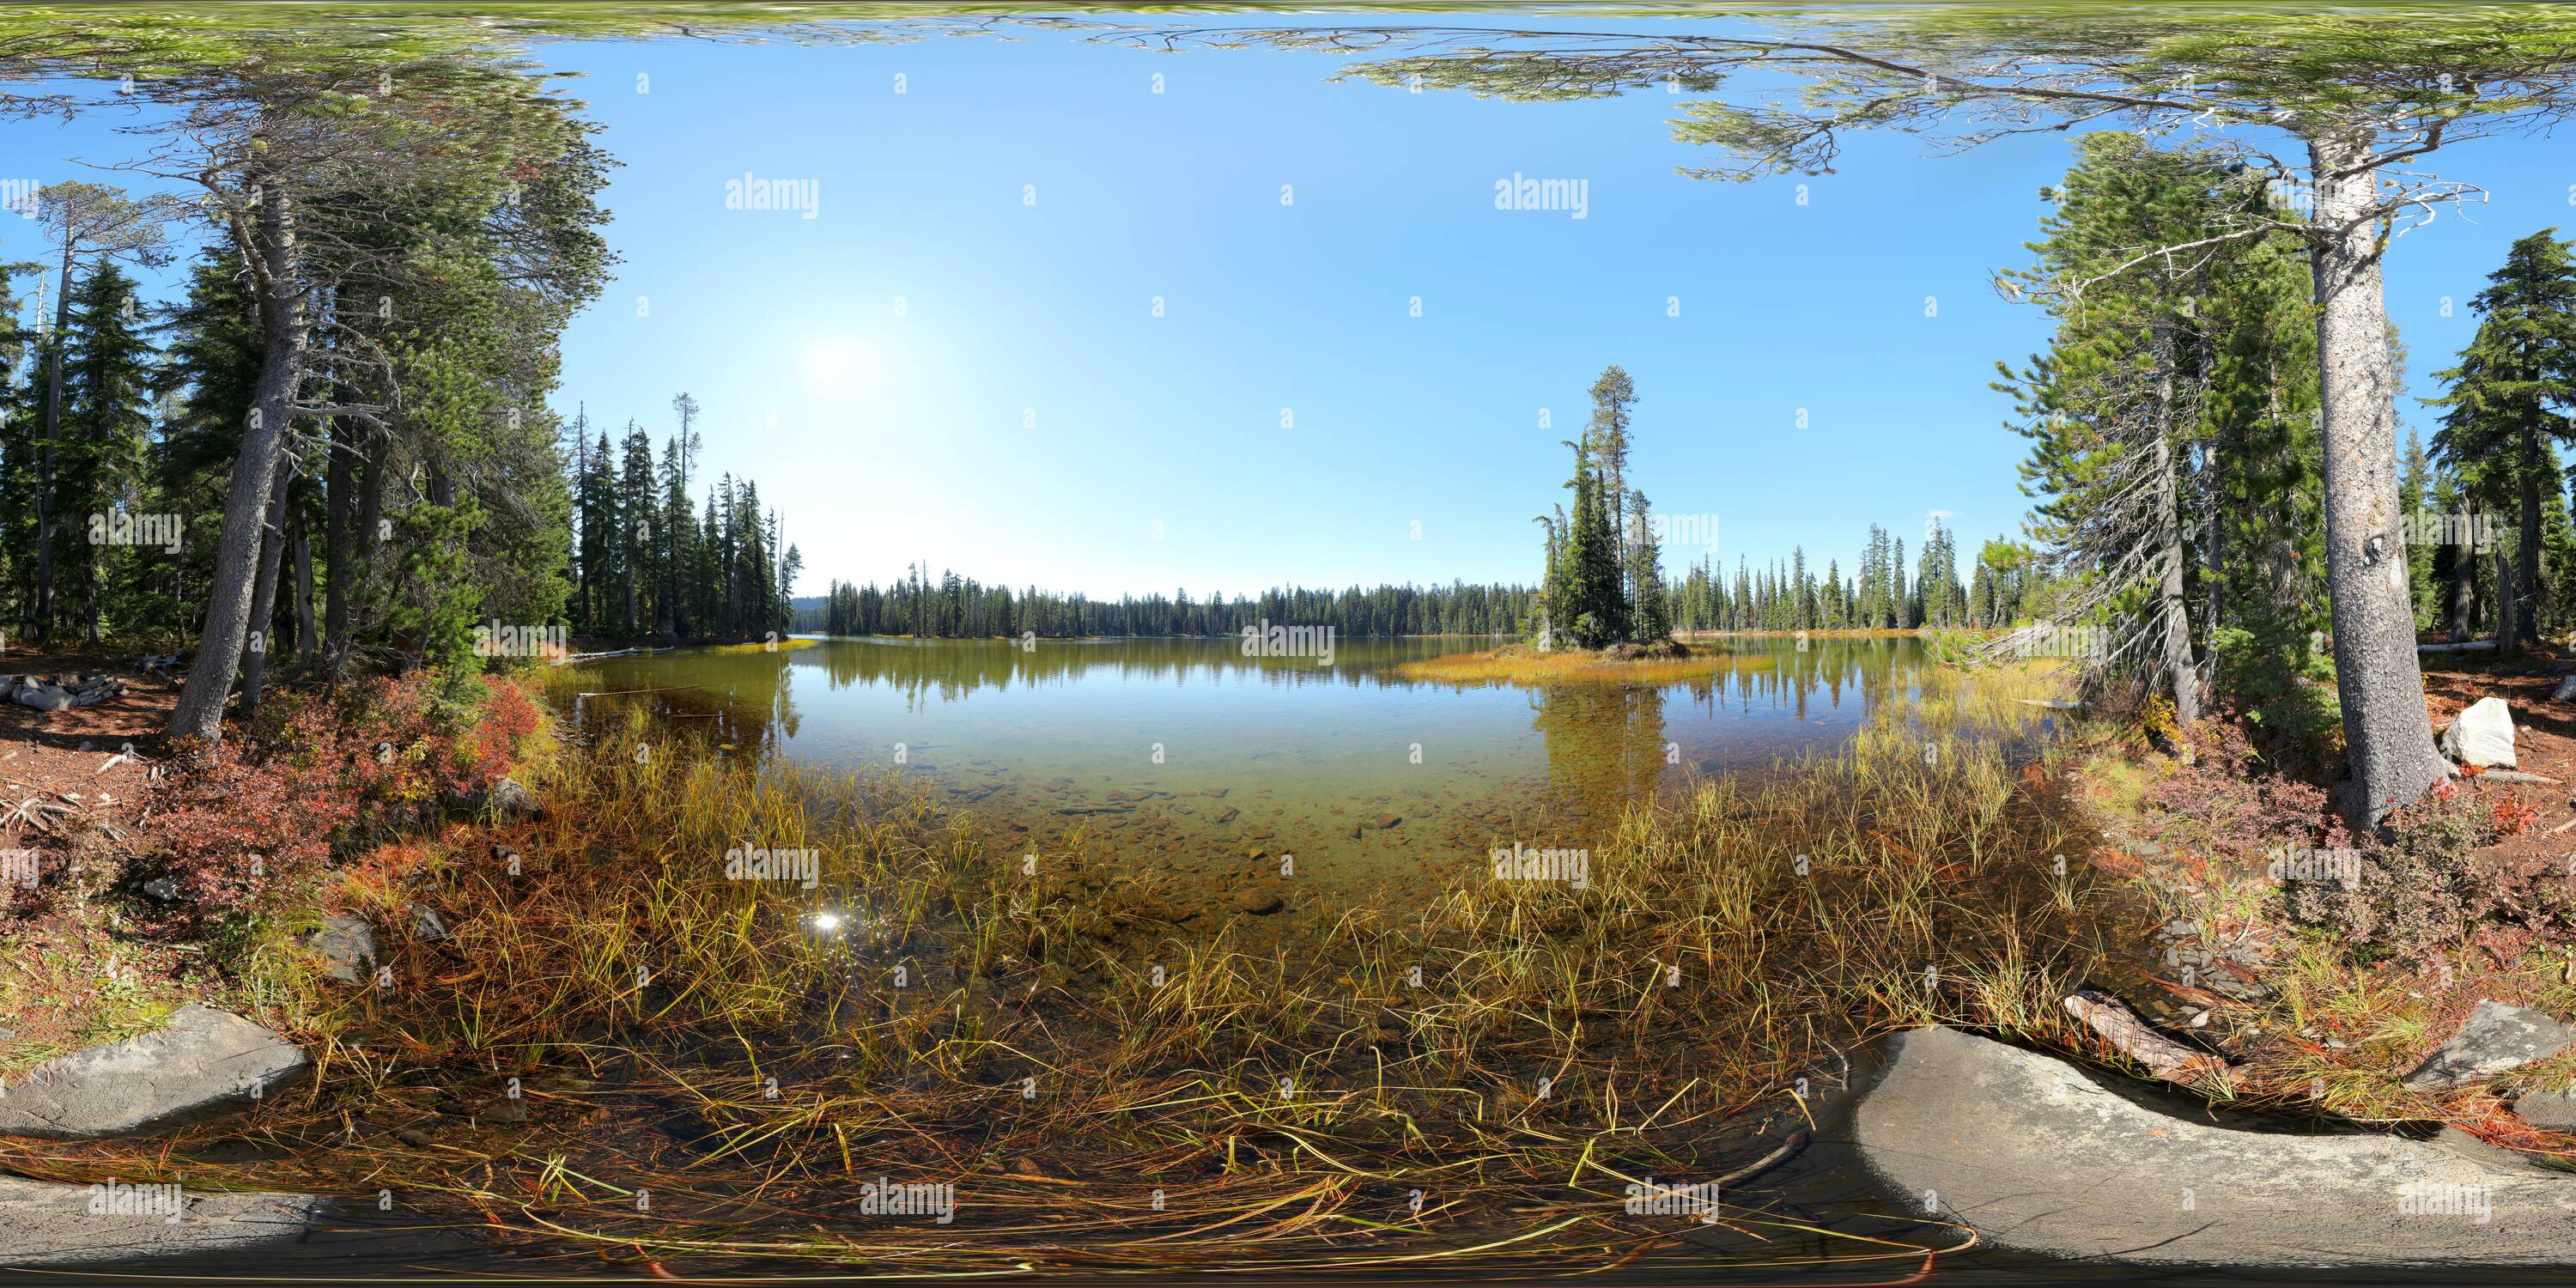 360 degree panoramic view of Island Lake [1]